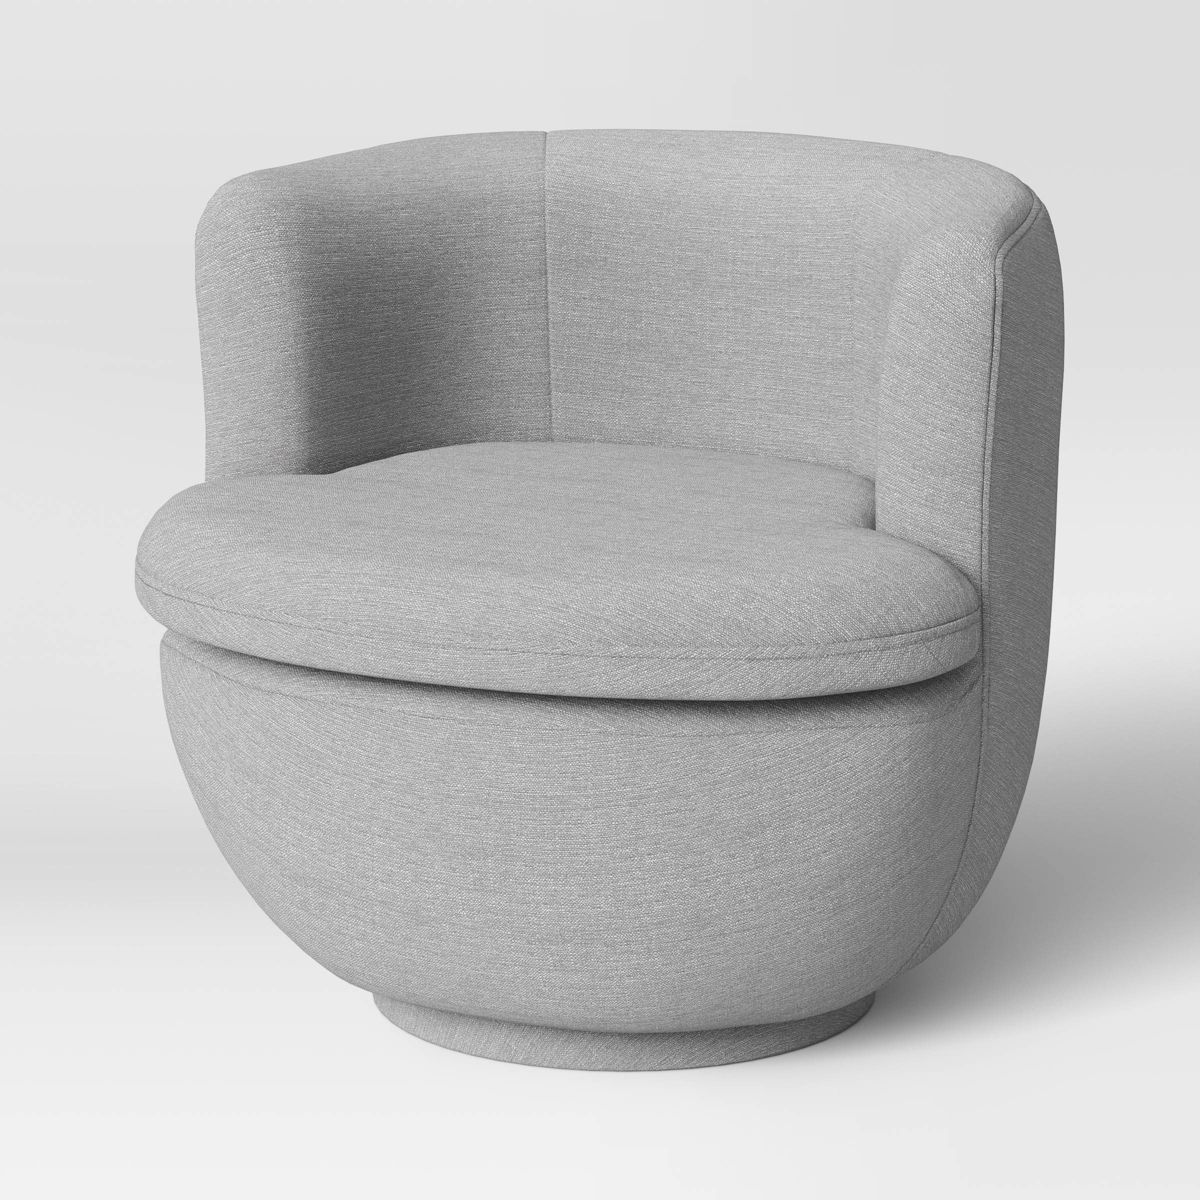 Dorton Round Swivel Barrel Chair Gray Woven Fabric - Project 62™ | Target